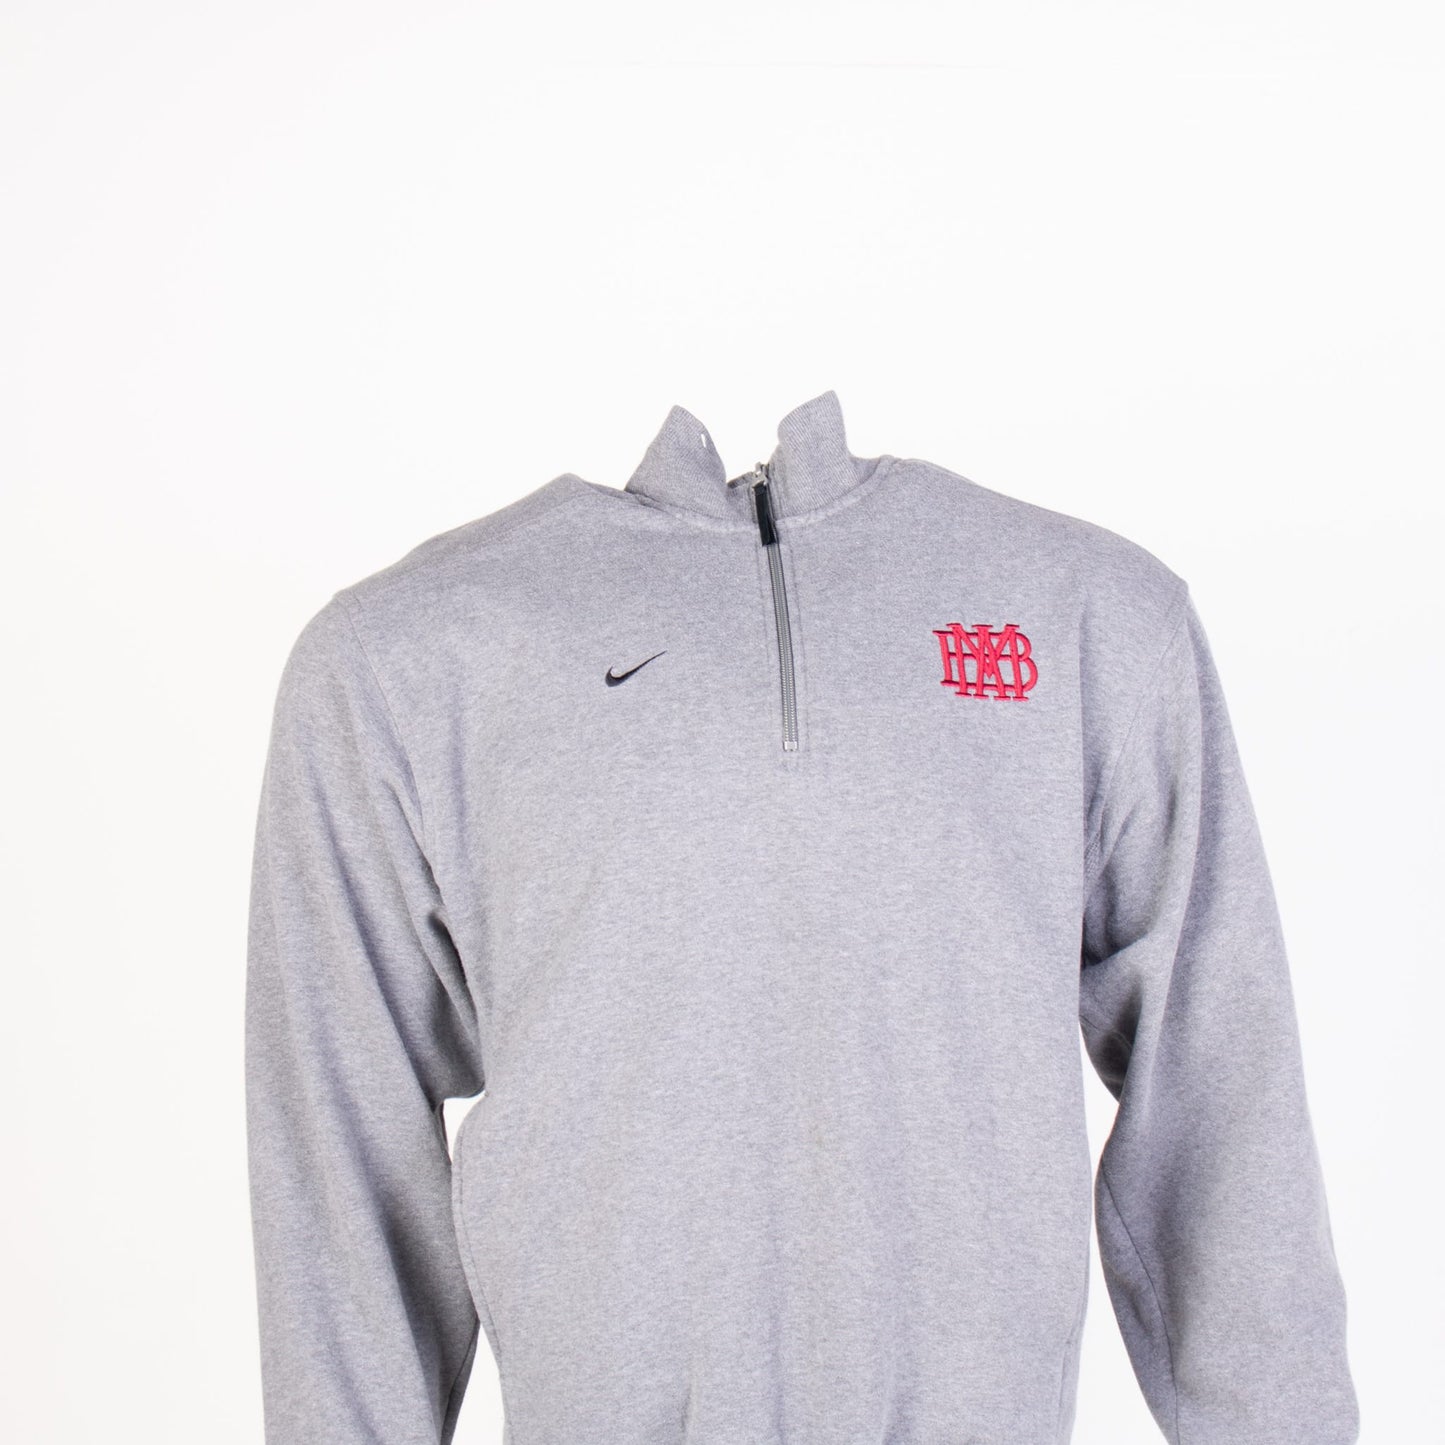 Vintage Nike Sweatshirt - Grey - American Madness